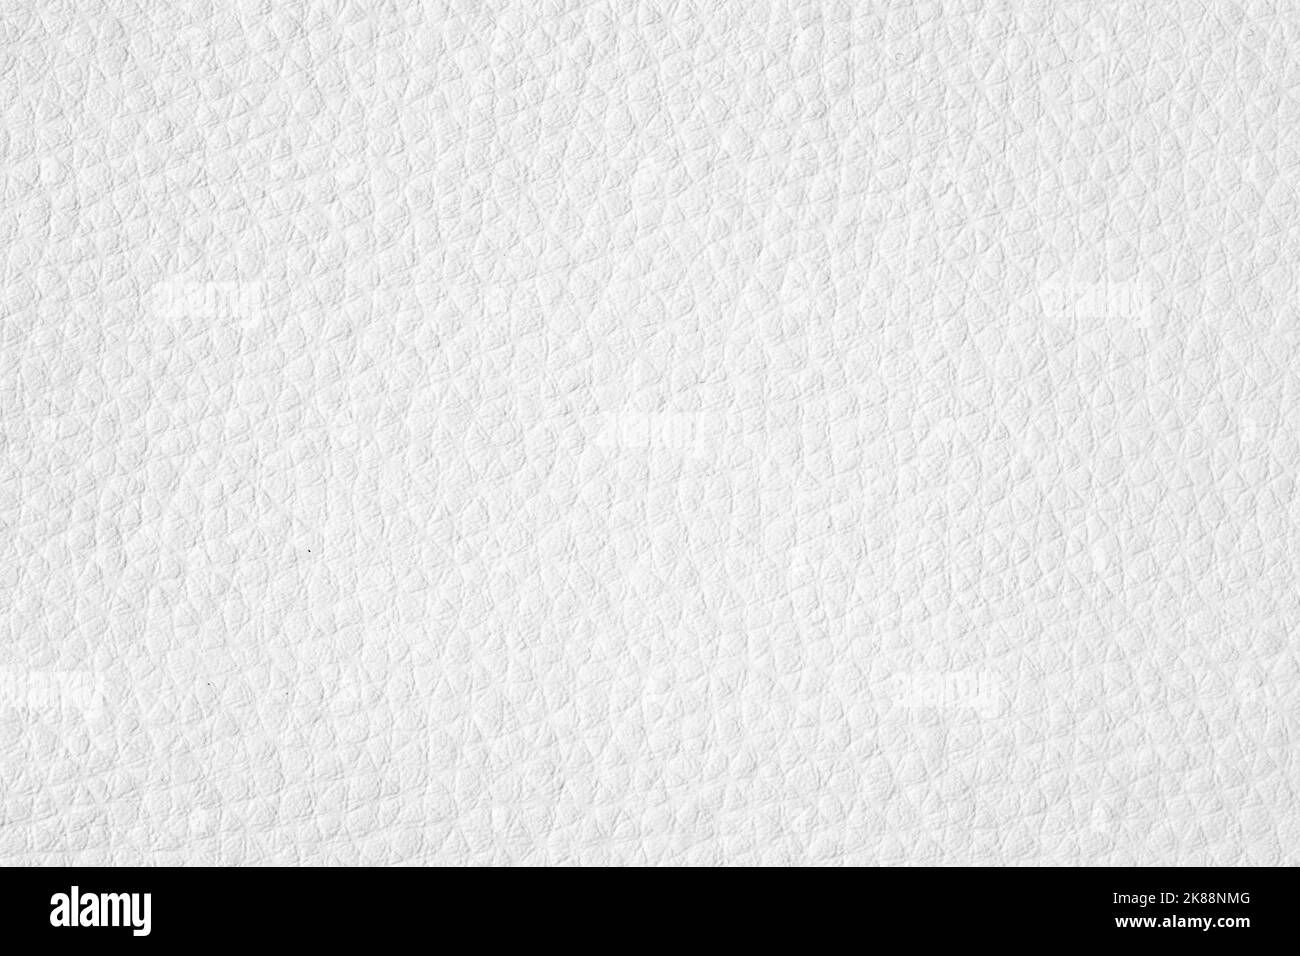 White Leather background texture. Full frame Stock Photo